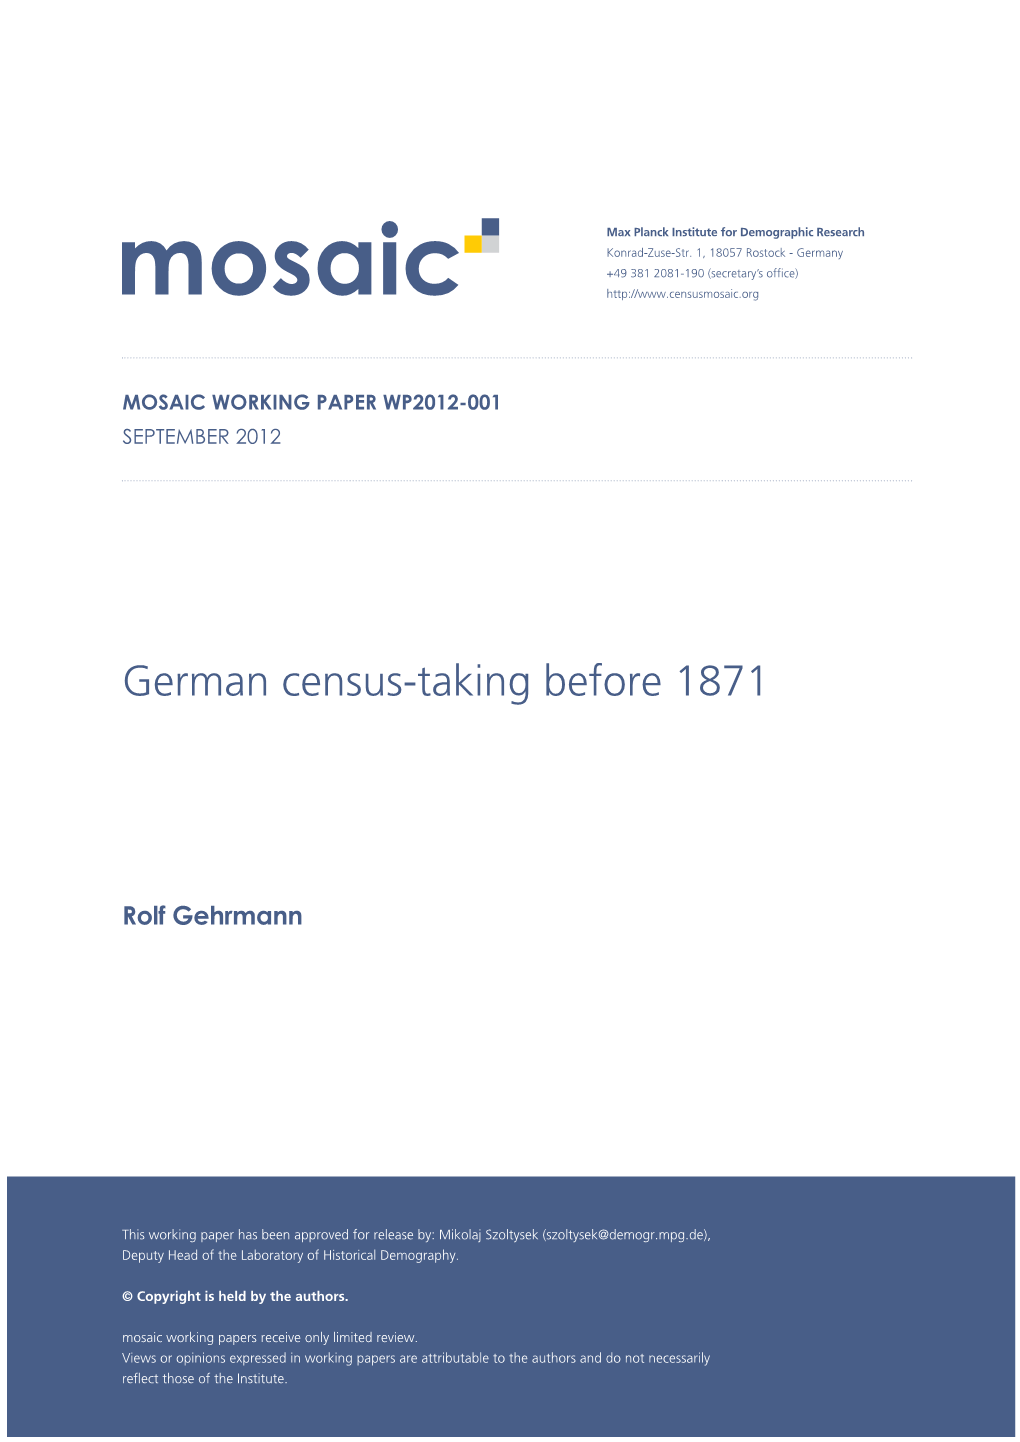 Mosaic Working Paper 2012-001